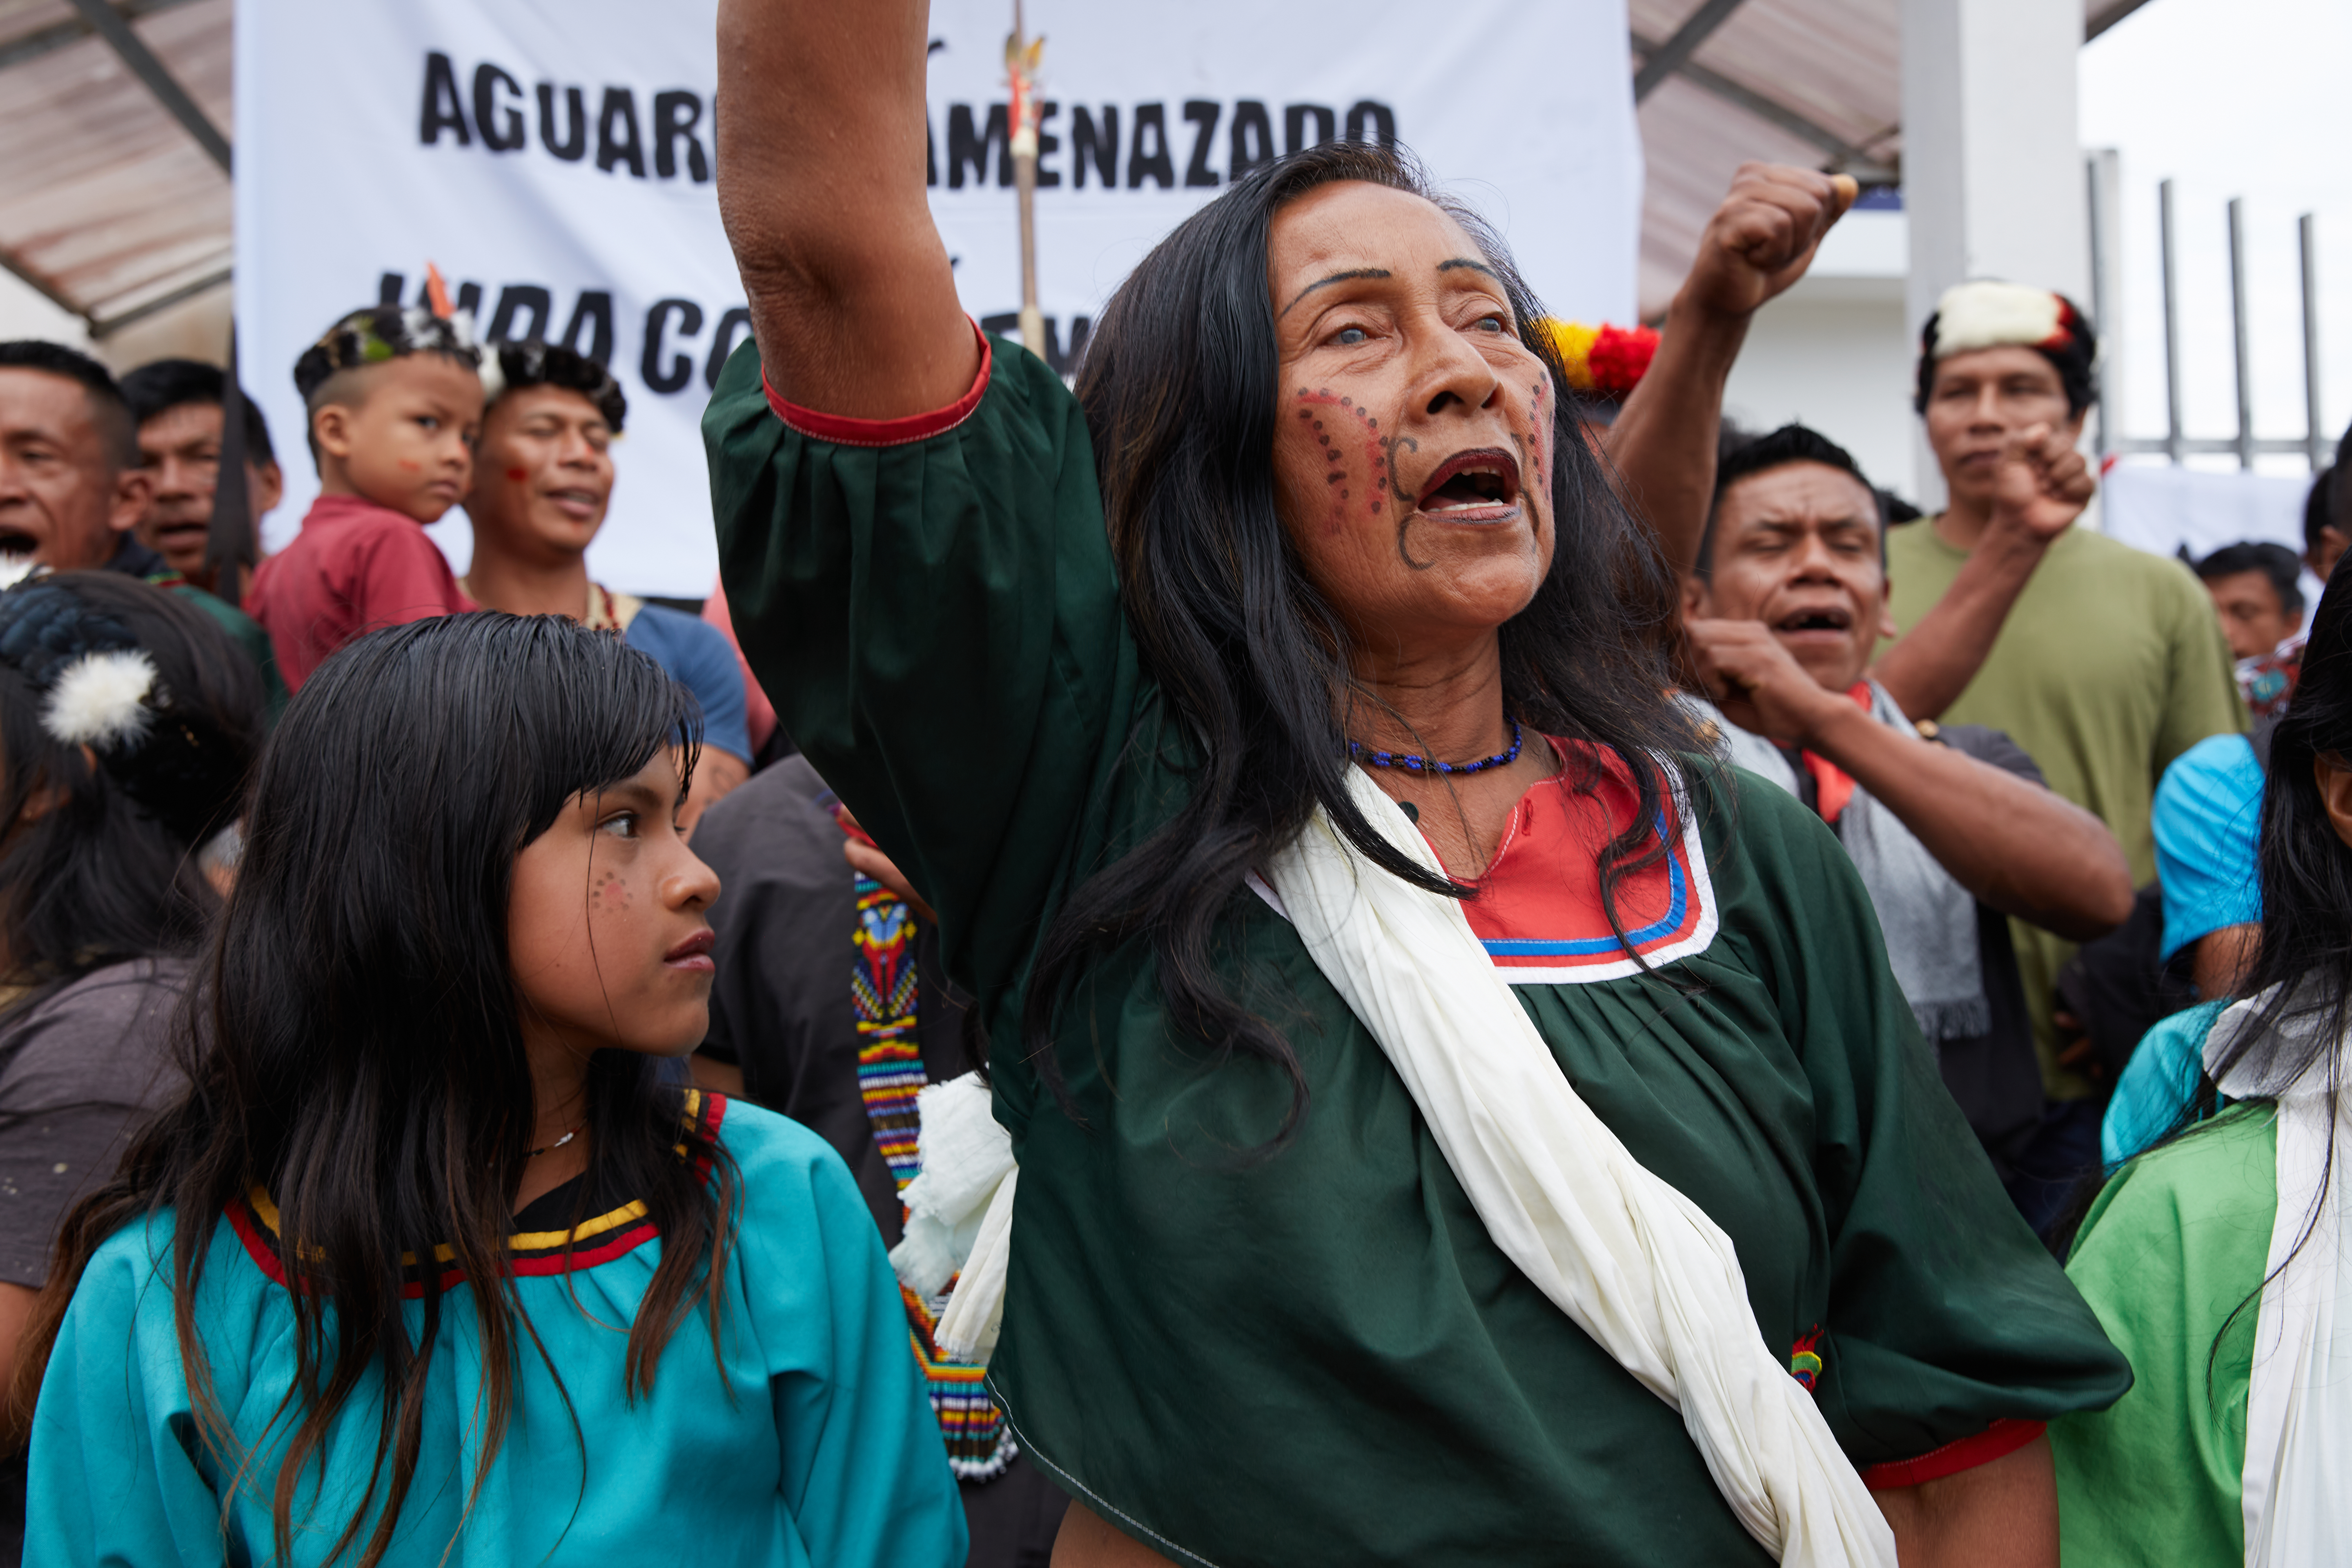 The Kofan people of Sinangoe in Ecuadorian Amazon protest